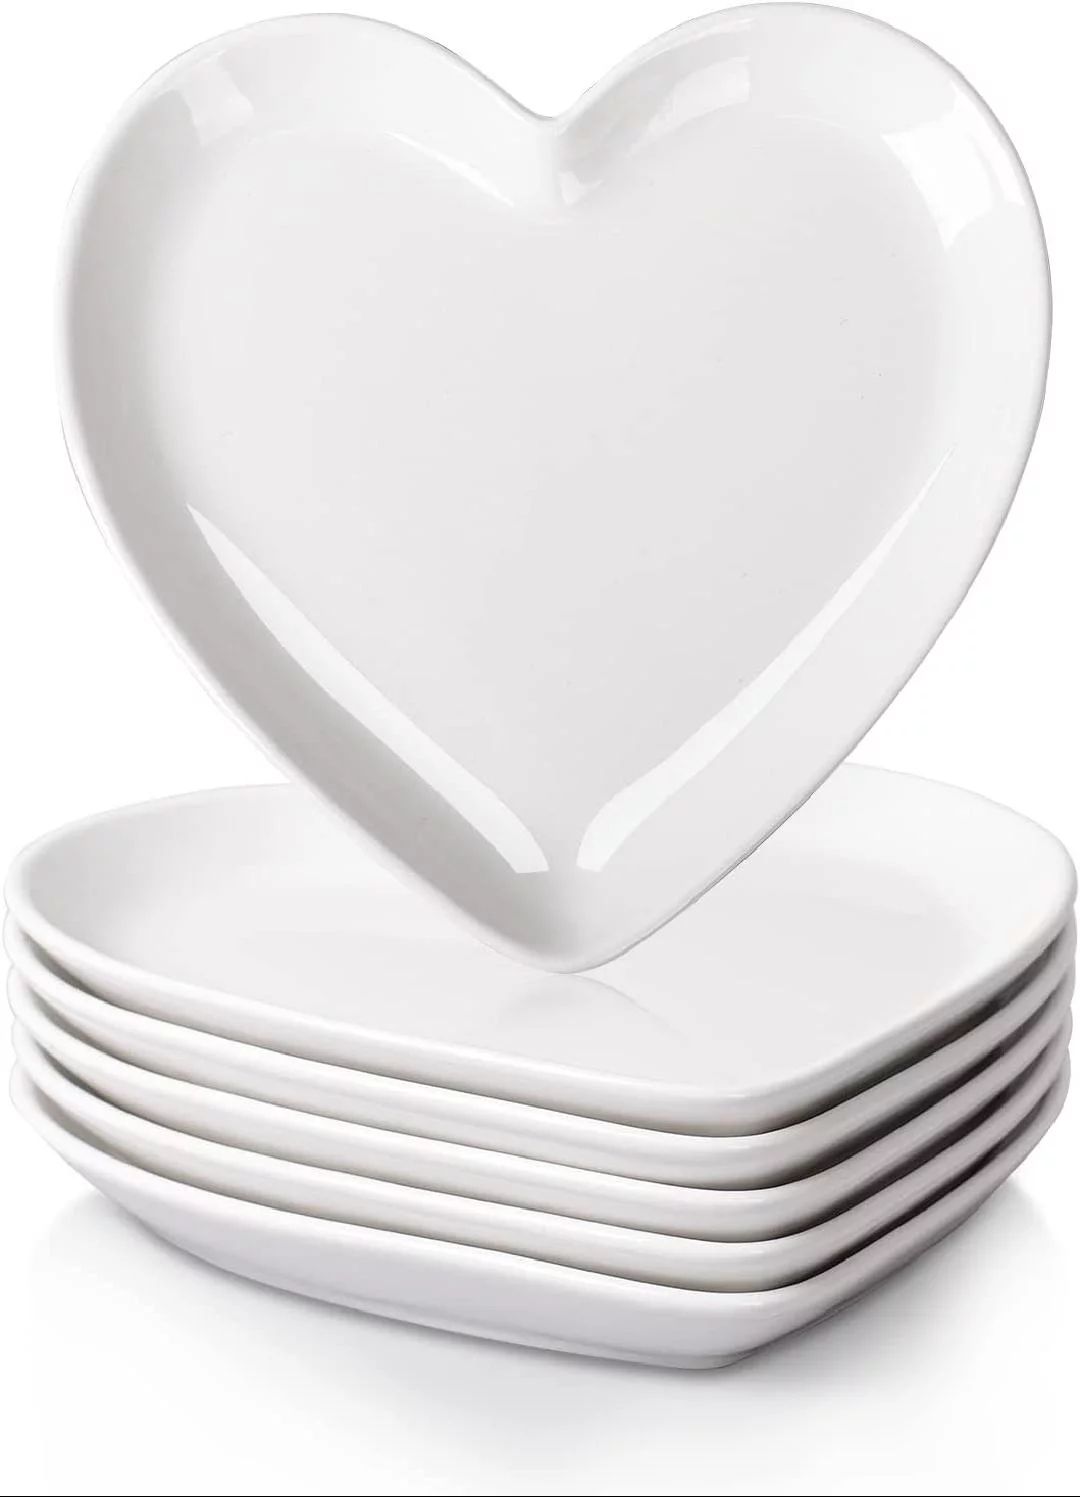 Heart Shaped Dessert Salad Plates- 6 Pack, 7.3 Inch Ceramic White Dinner Plates, Heart Dishes for... | Walmart (US)